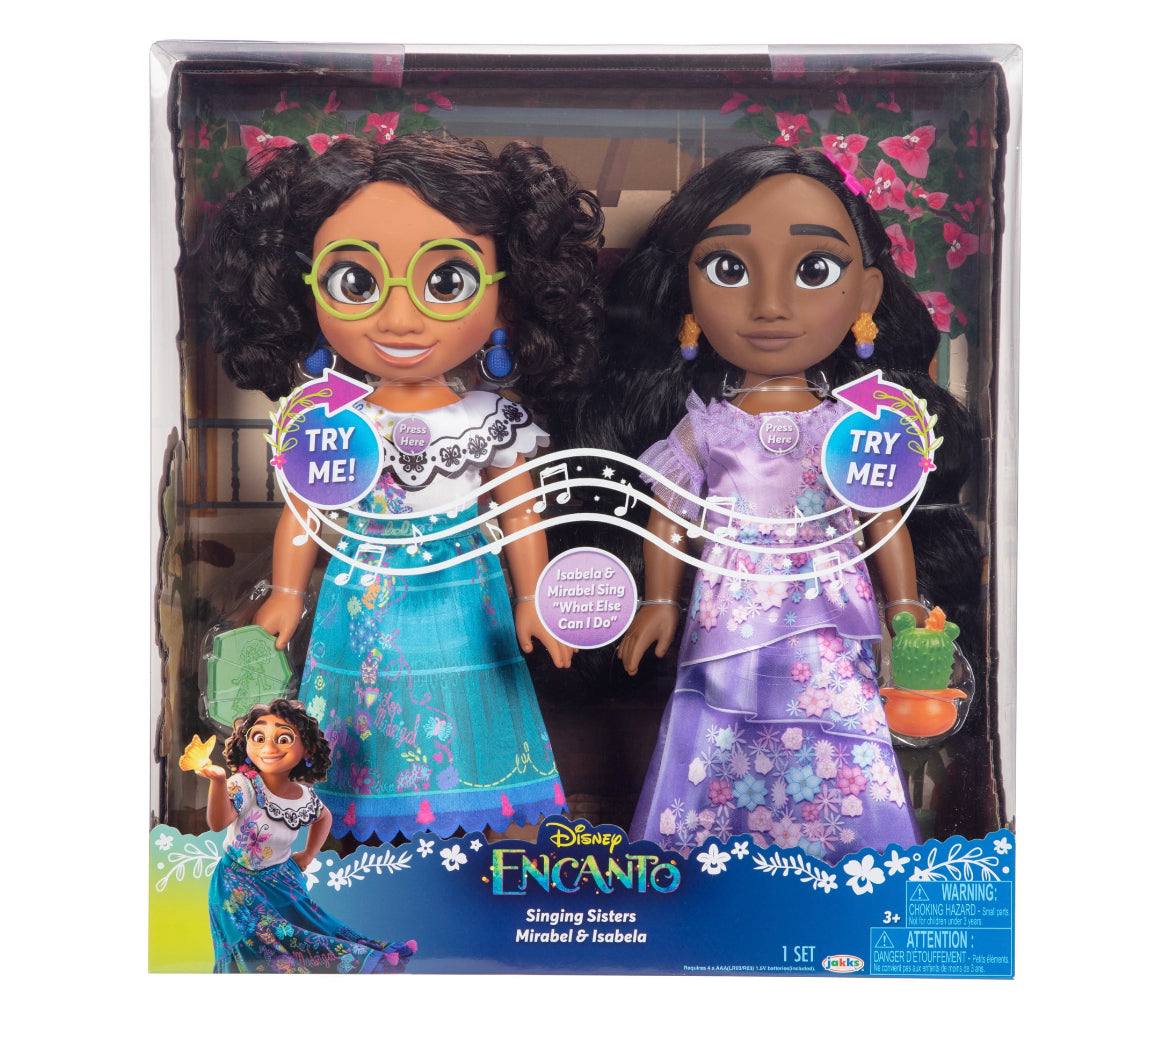 Disney Encanto Singing Sisters Mirabel & Isabela 14” Dolls 22439